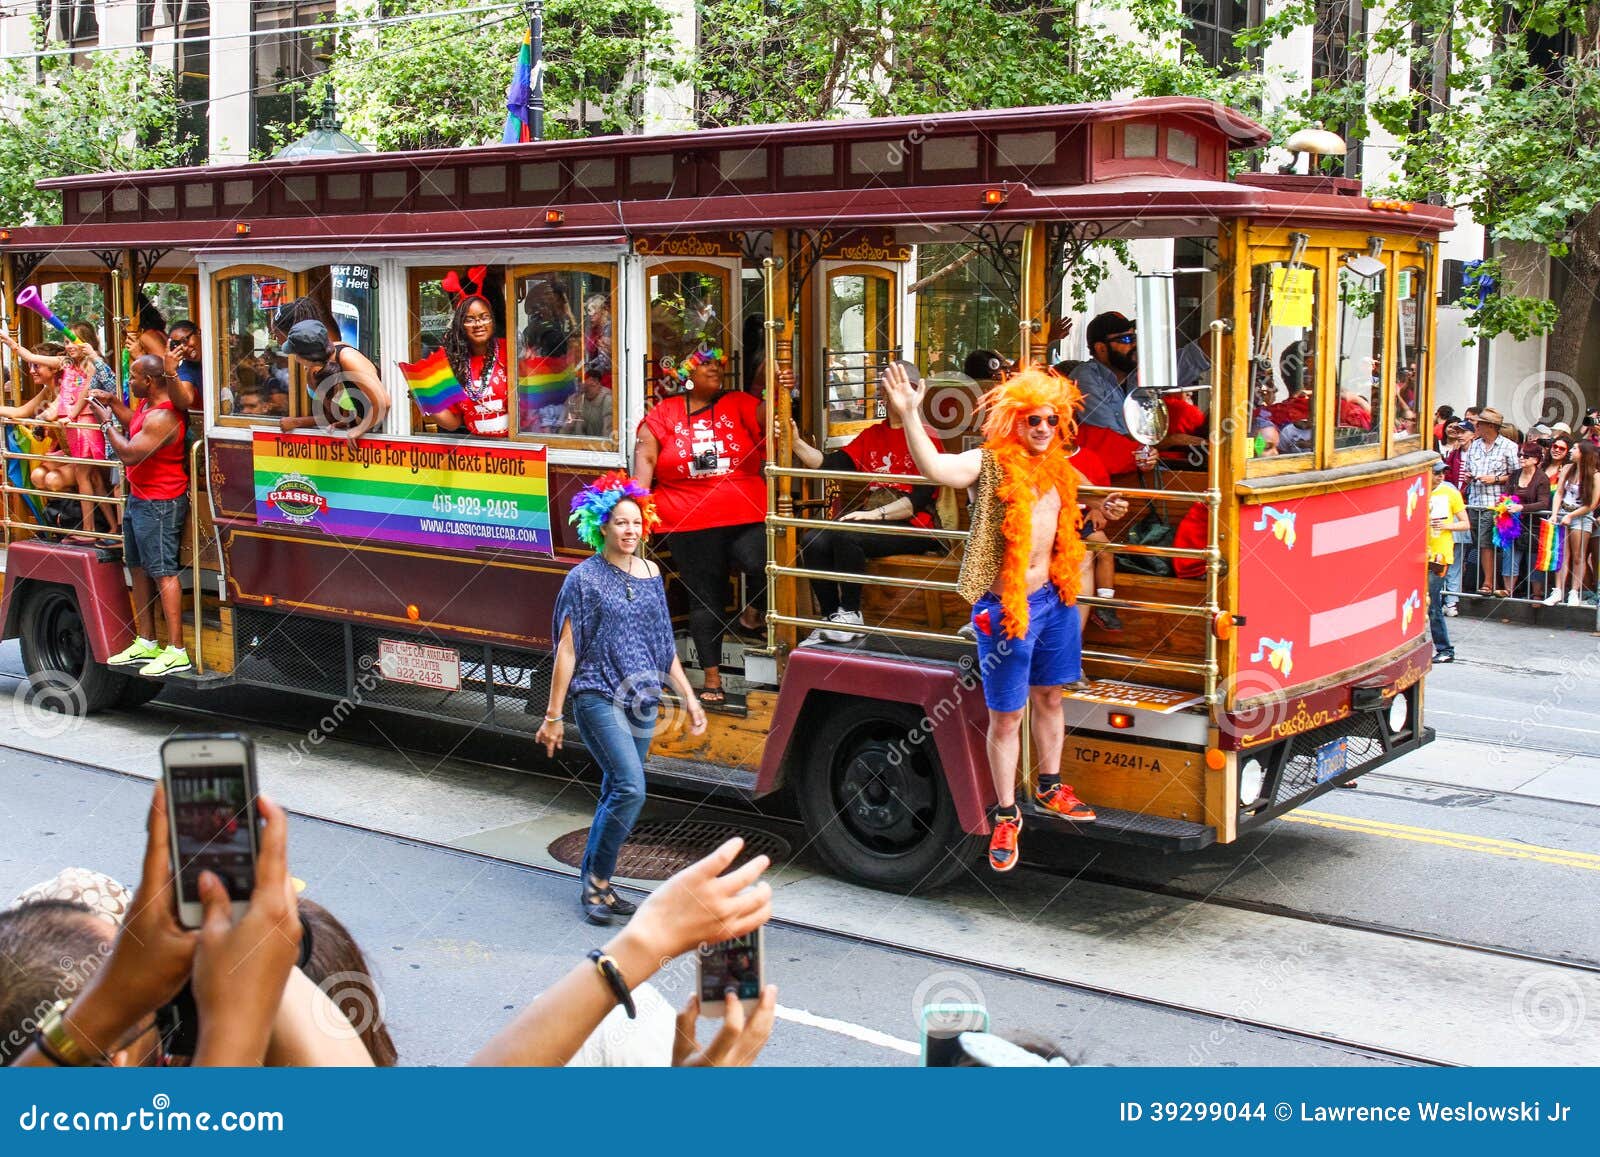 San Francisco Pride Parade Trikone LGBT Trolley Float 